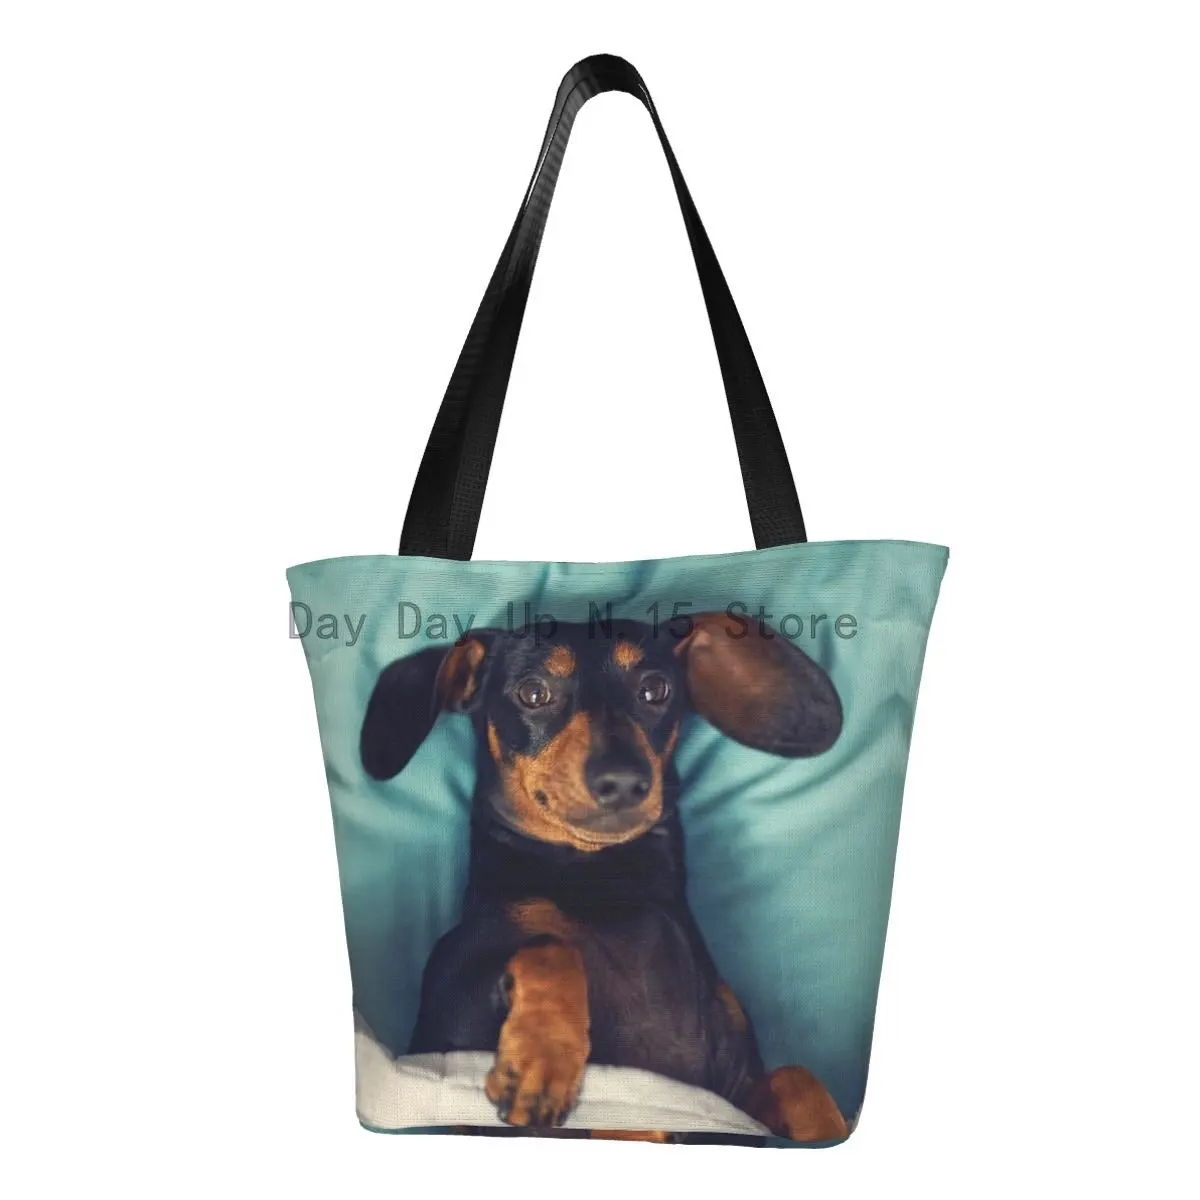 

Reusable Dachshund Shopping Bag Women Shoulder Canvas Tote Bag Washable Badger Sausage the Wiener Dog Groceries Shopper Bags